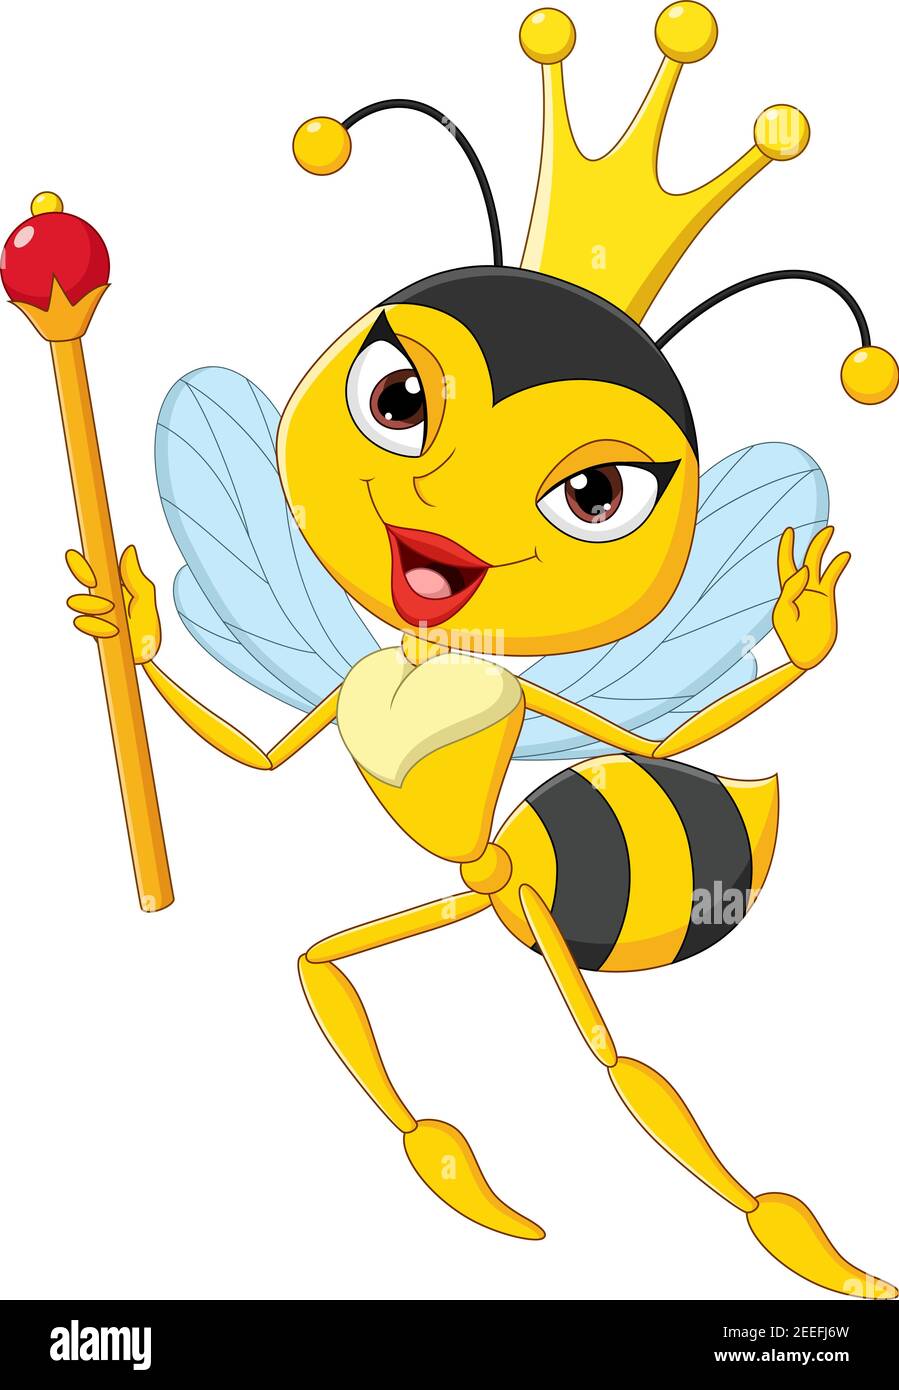 Cartoon Queen Bee holding a scepter Stock Vector